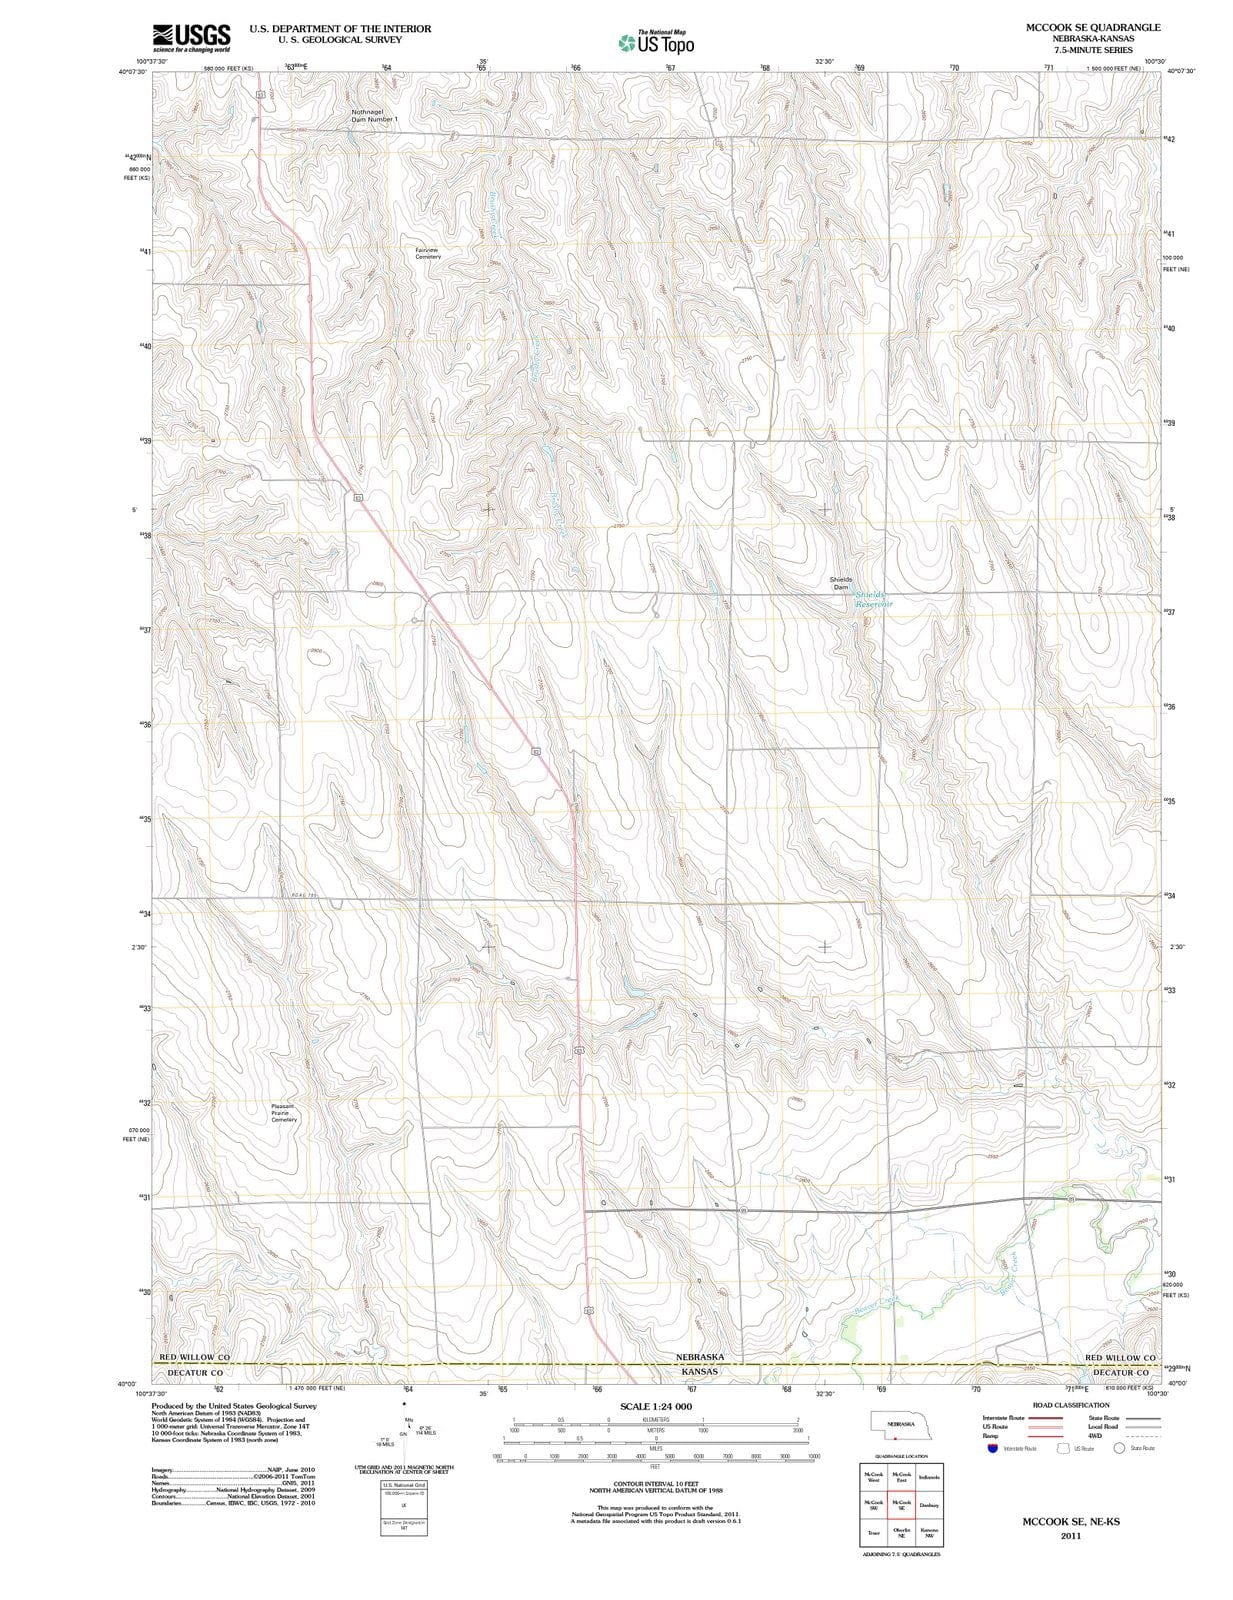 2011 McCook, NE - Nebraska - USGS Topographic Map